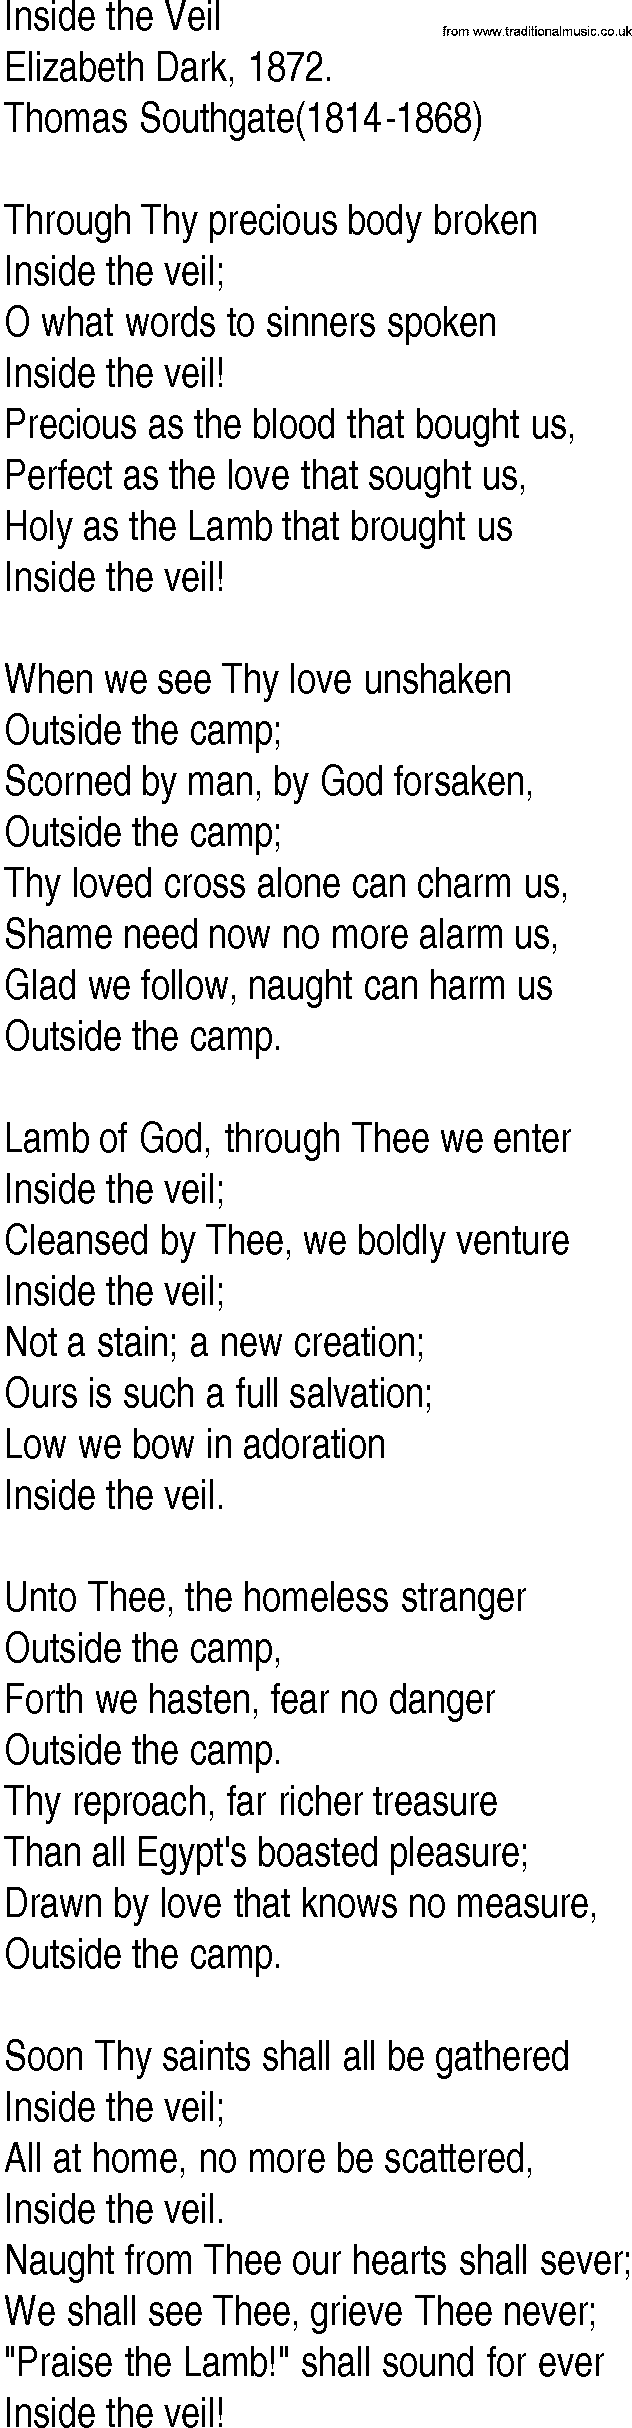 Hymn and Gospel Song: Inside the Veil by Elizabeth Dark lyrics